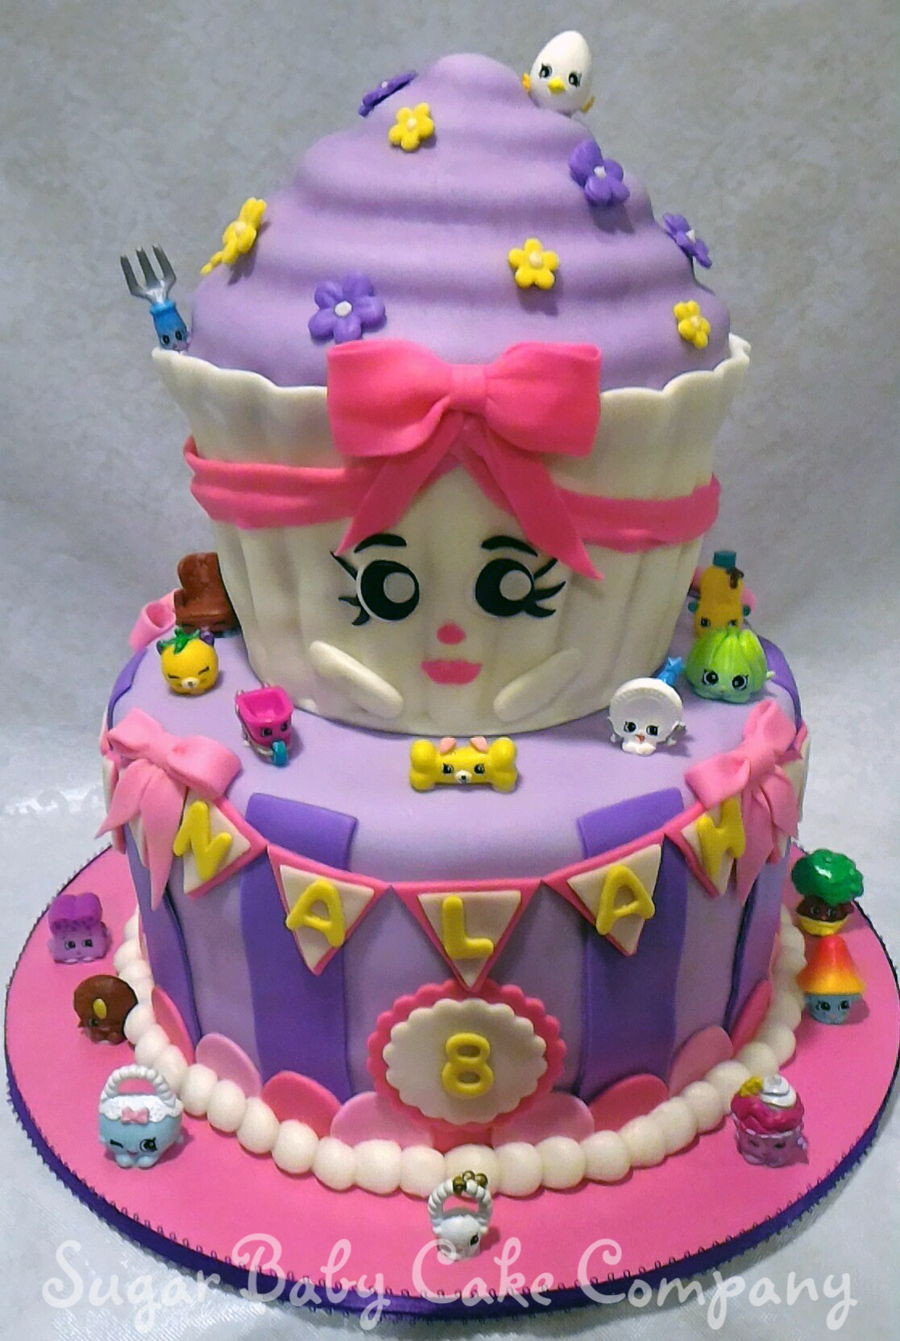 Best ideas about Shopkins Birthday Cake
. Save or Pin Shopkins Birthday Cake CakeCentral Now.